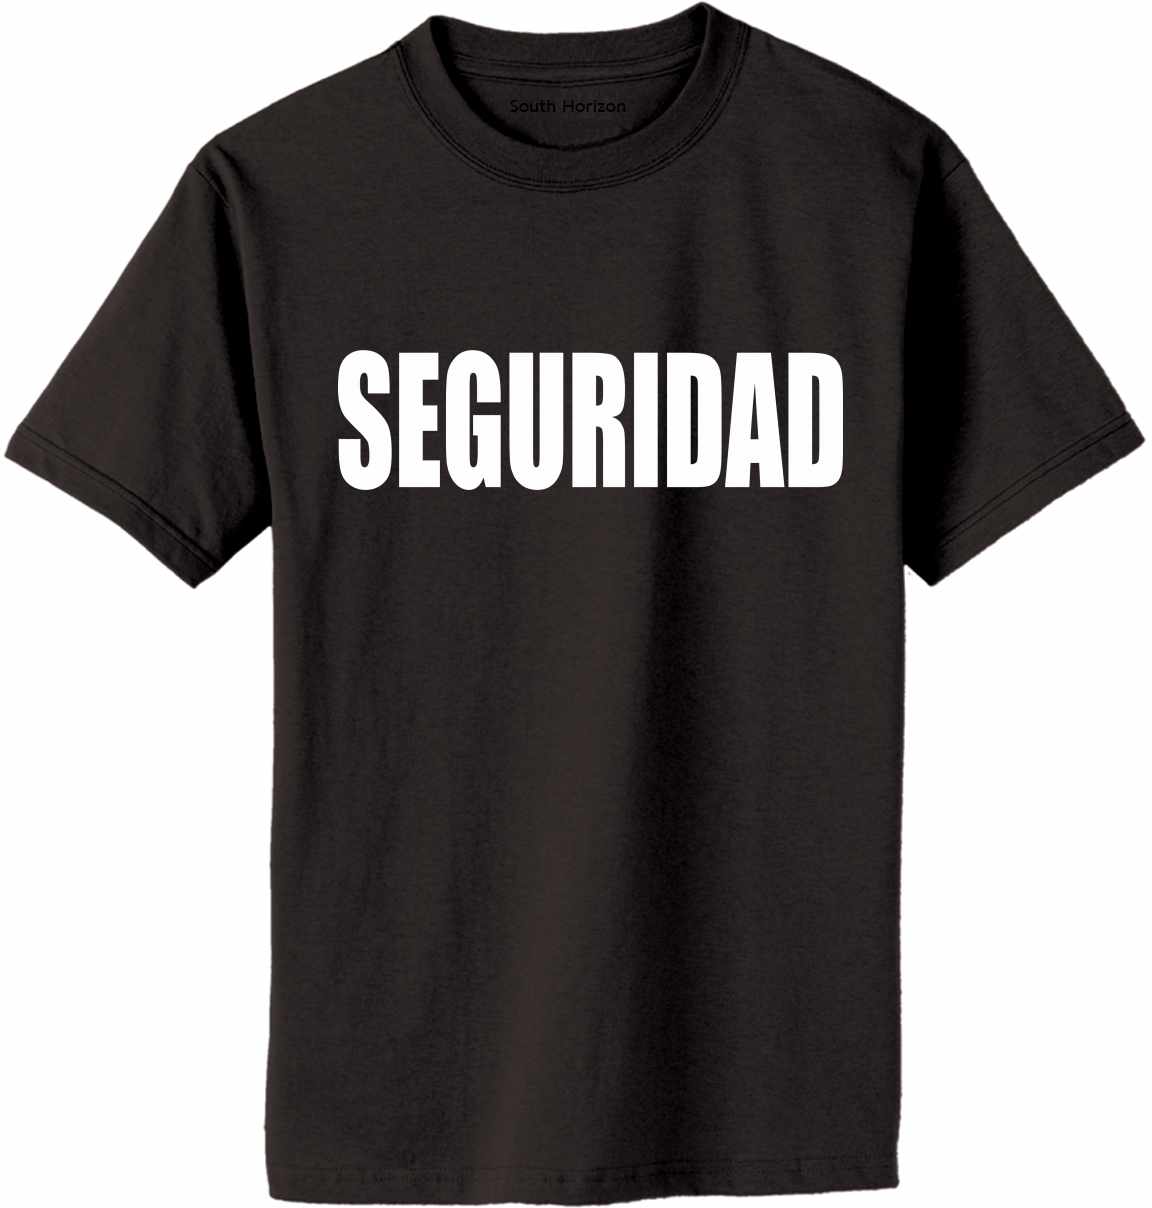 SEGURIDAD Adult T-Shirt